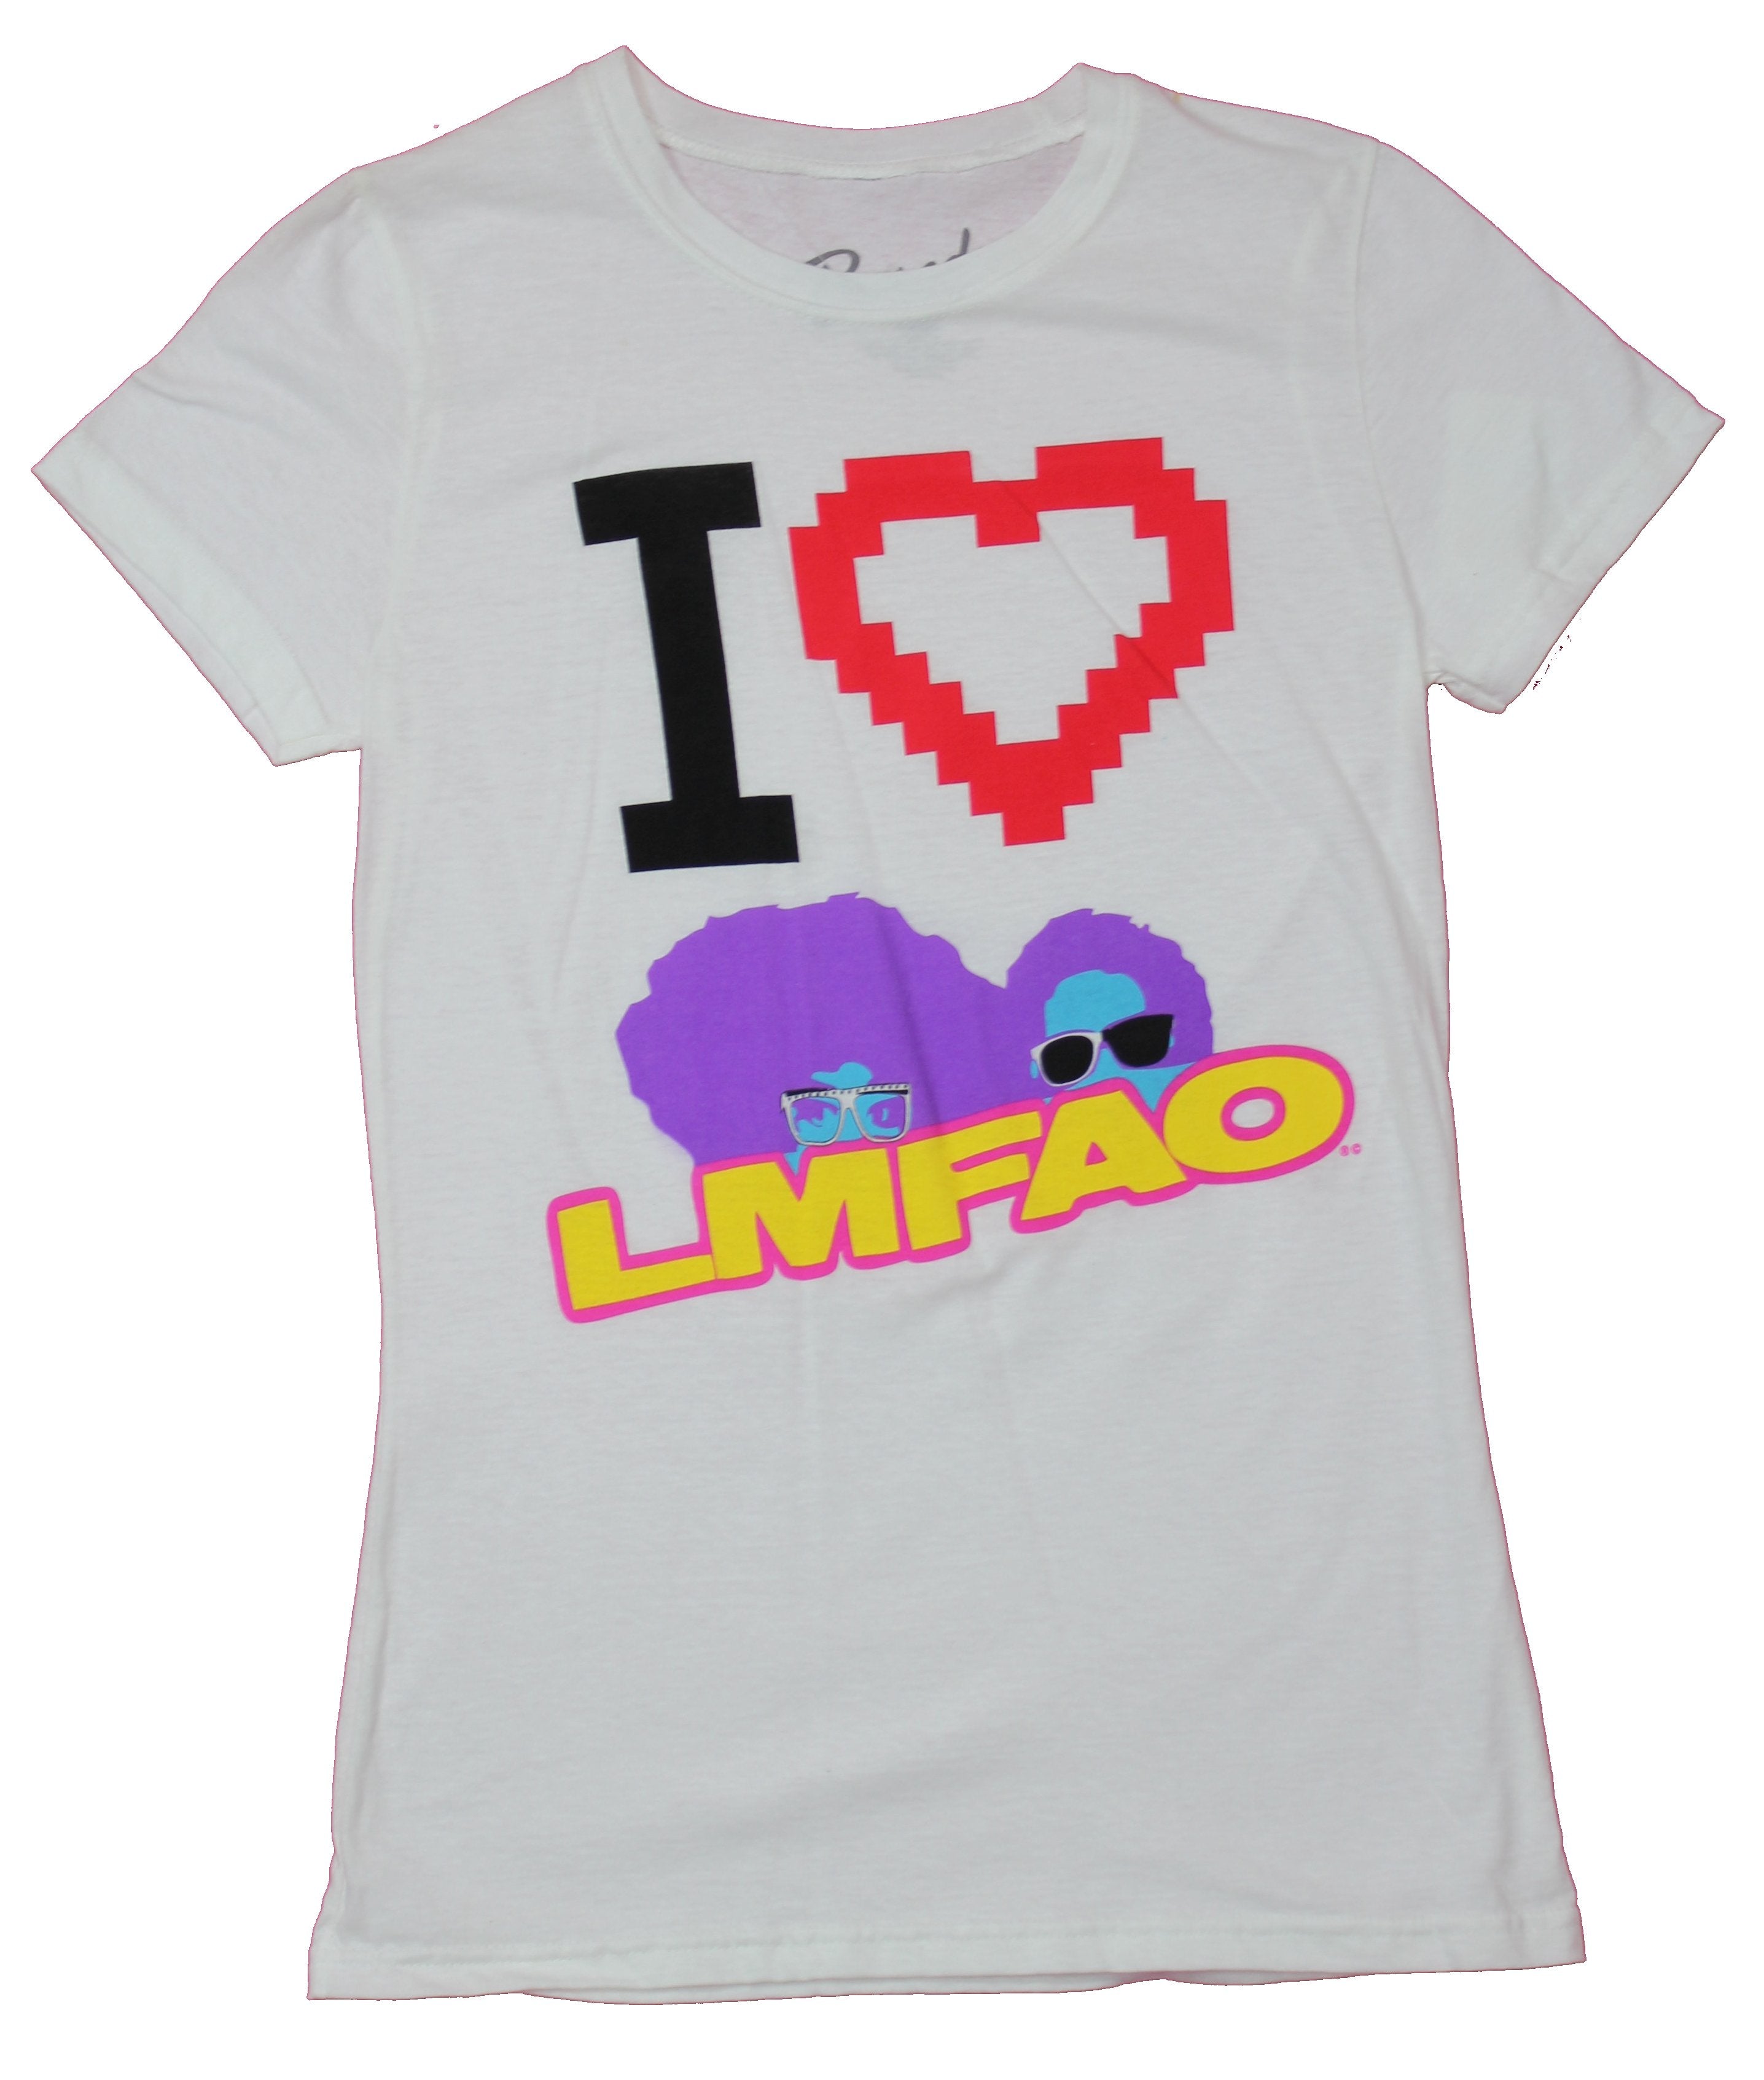 LMFAO Girls Juniors T-Shirt - I Heart LMFAO Image